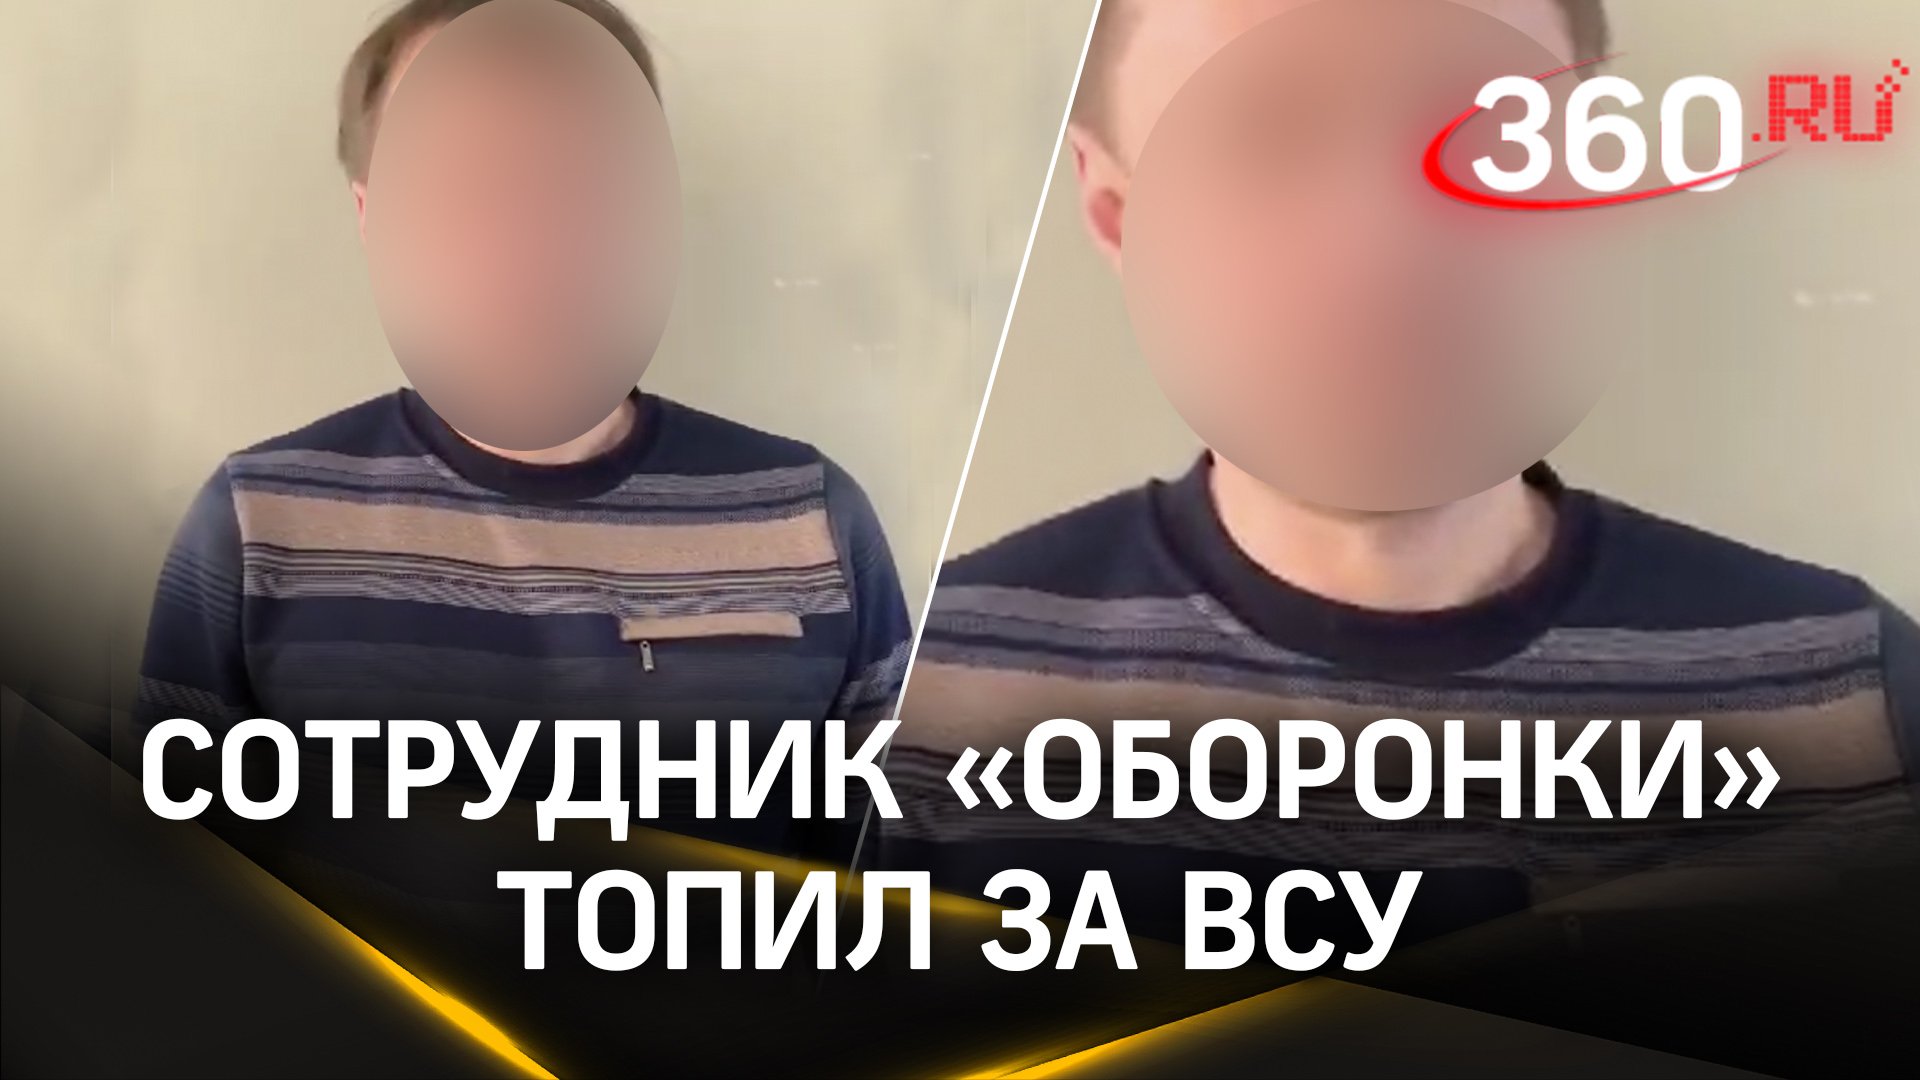 «Слава ВСУ!»: в Дмитрове задержали сотрудника оборонного предприятия, который топил за Украину